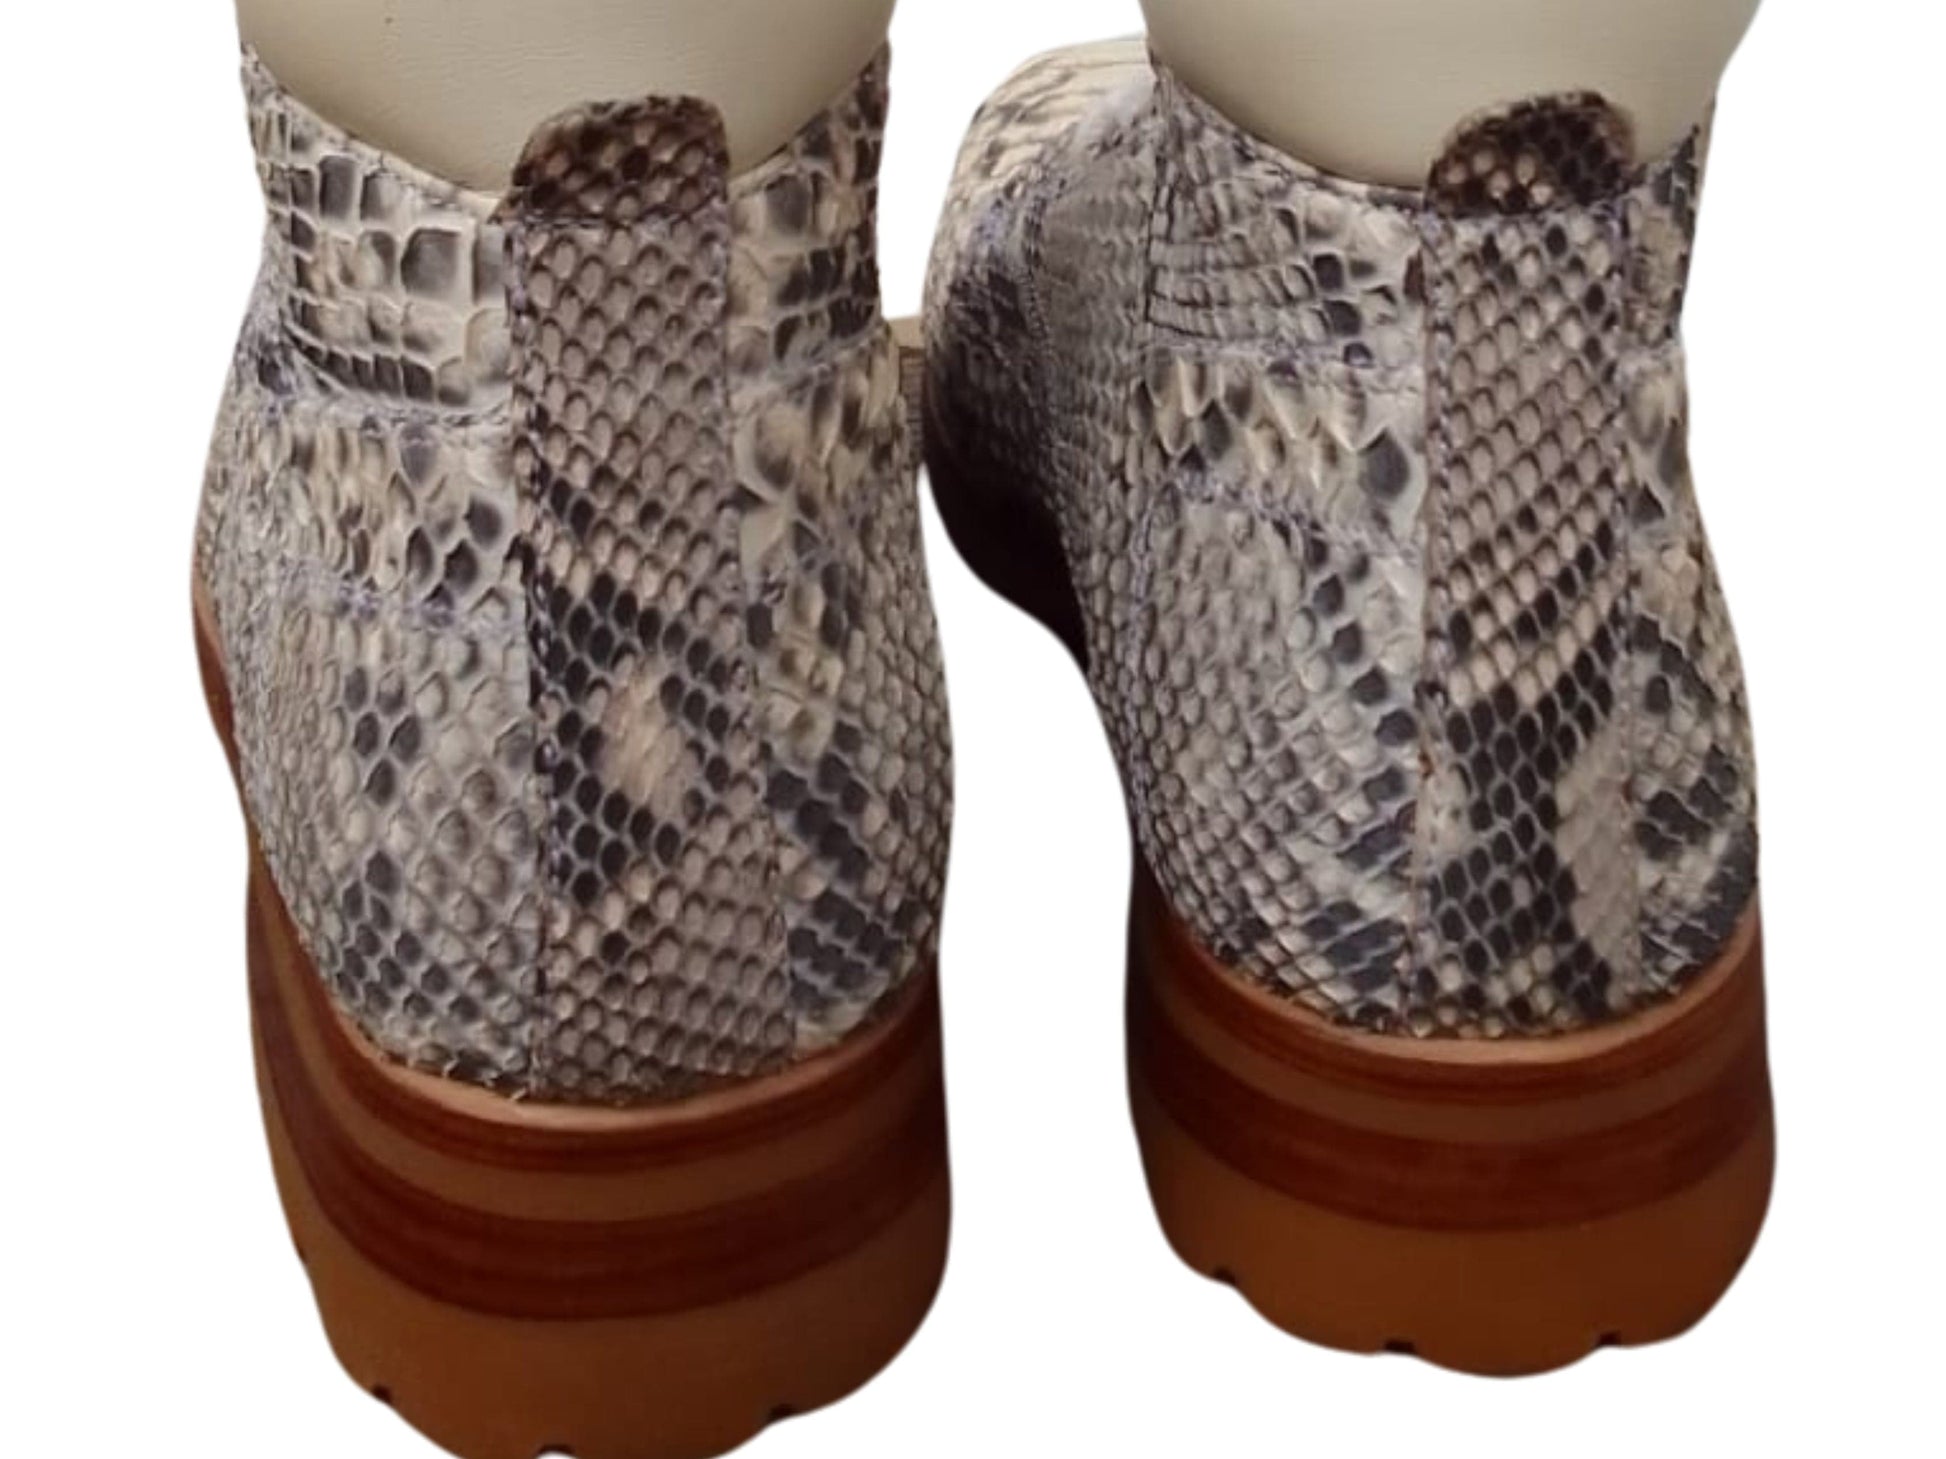 Shoes Snakeskin Python Leather Boots Python Jacket by LFM Fashion